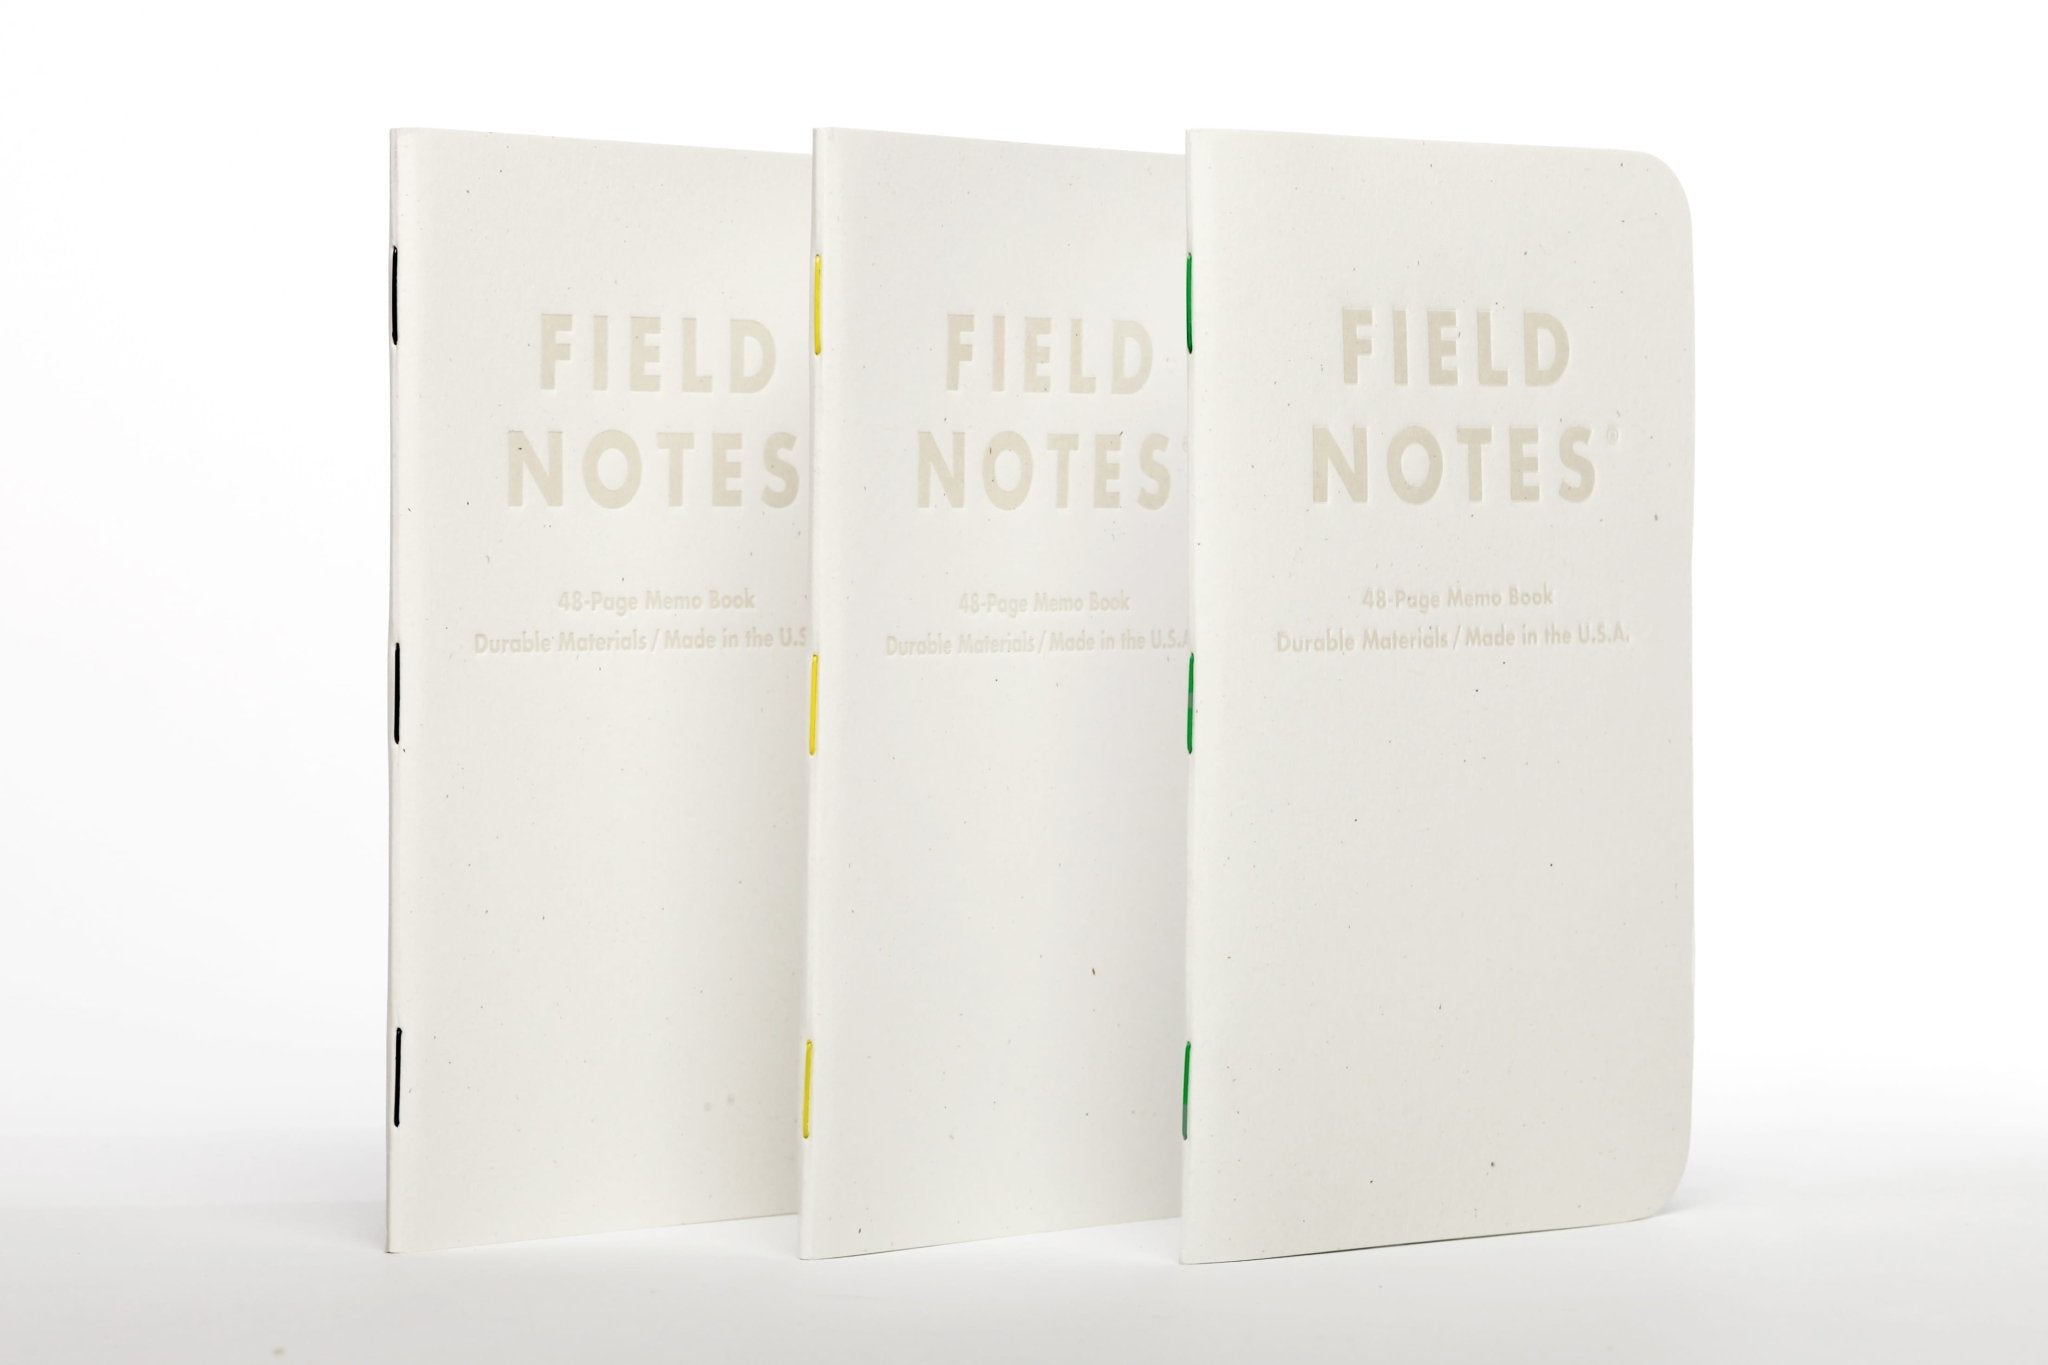 Field Notes: Birch Bark